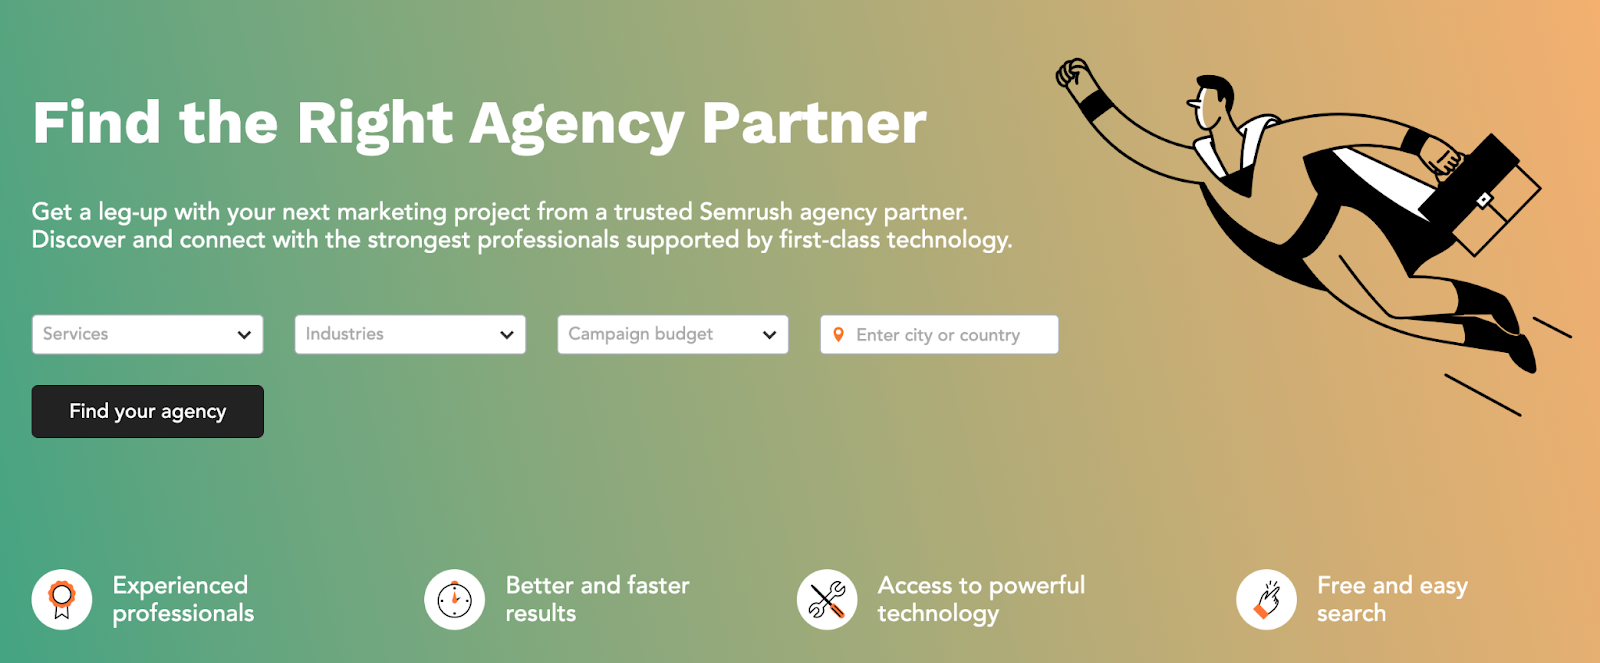 Semrush Agency Growth Kit